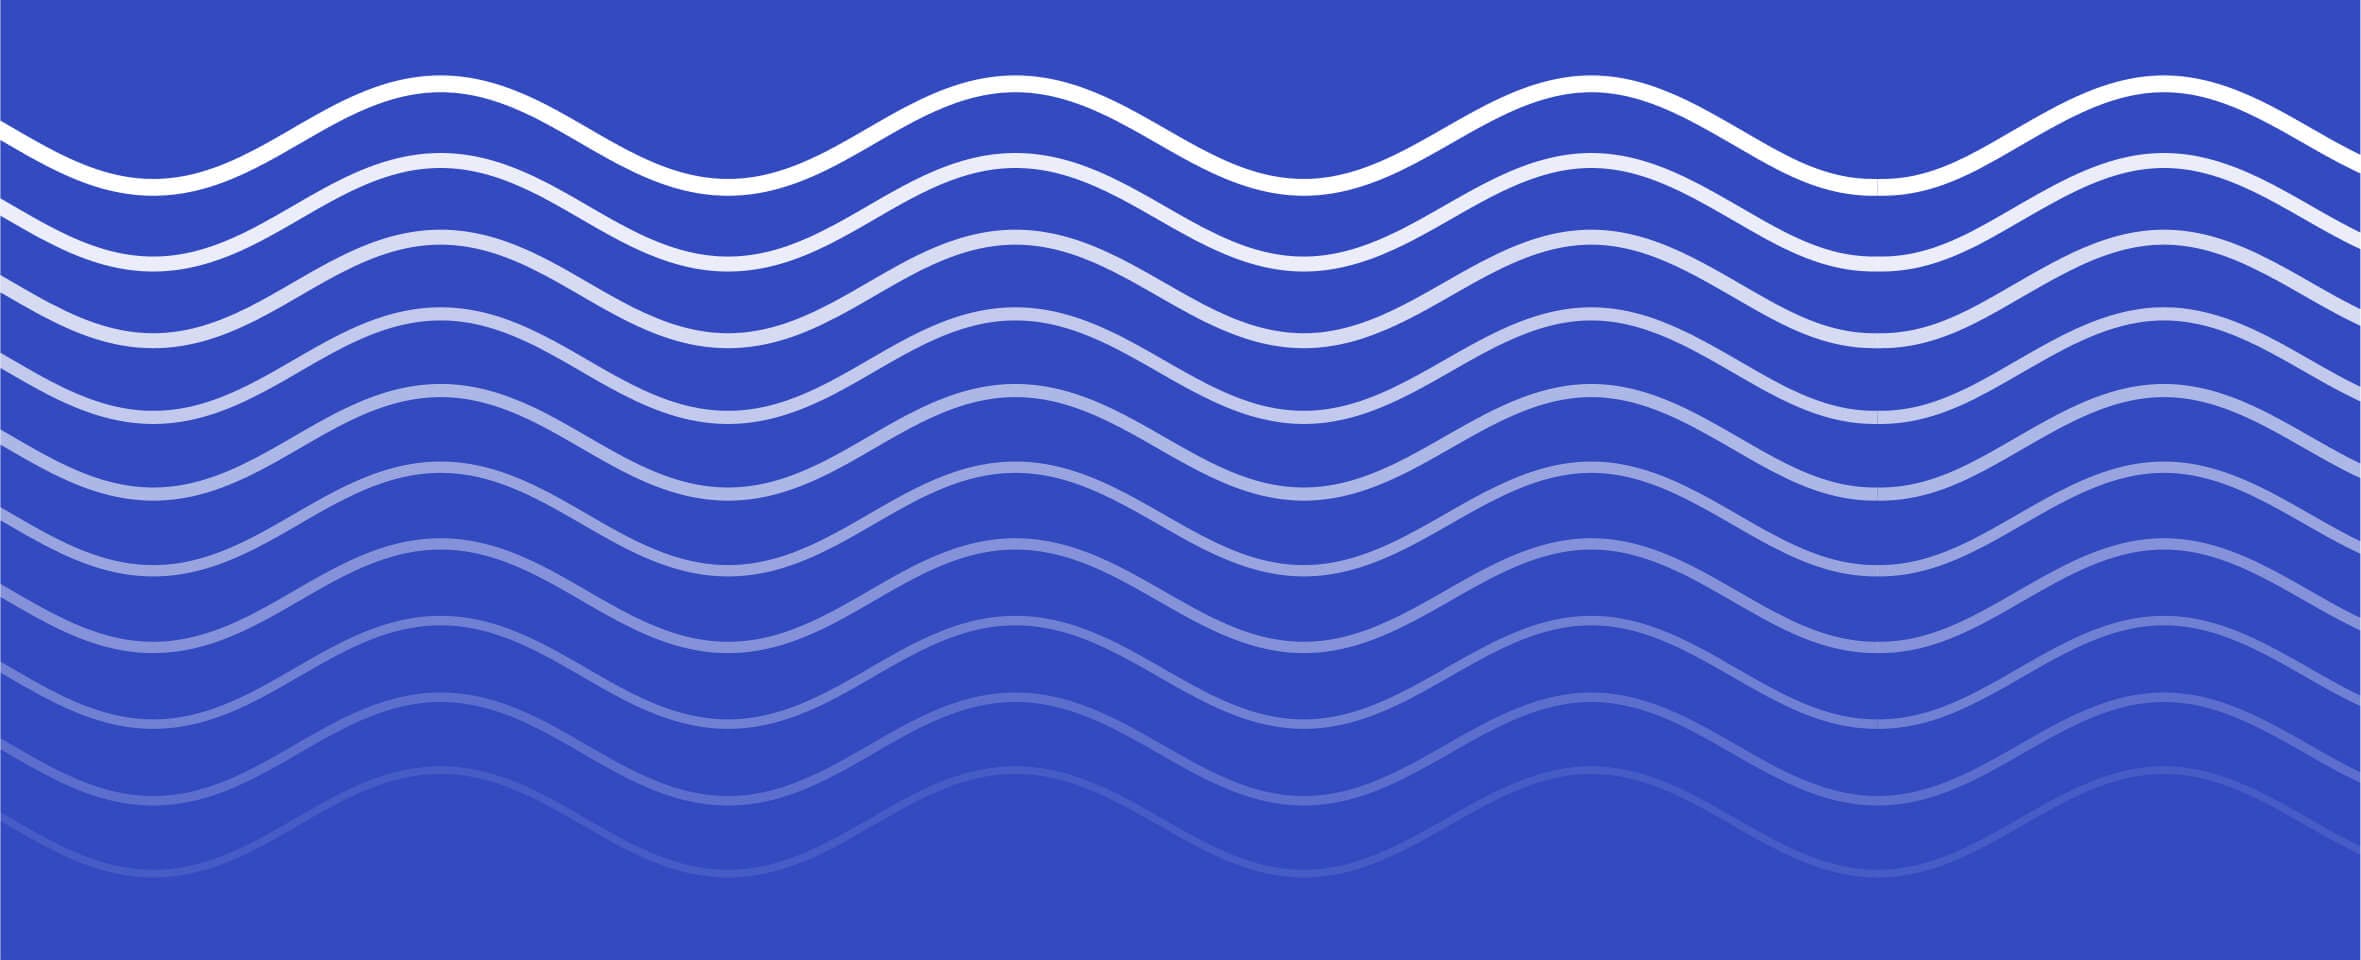 Shipup - Patterns Blue Waves 